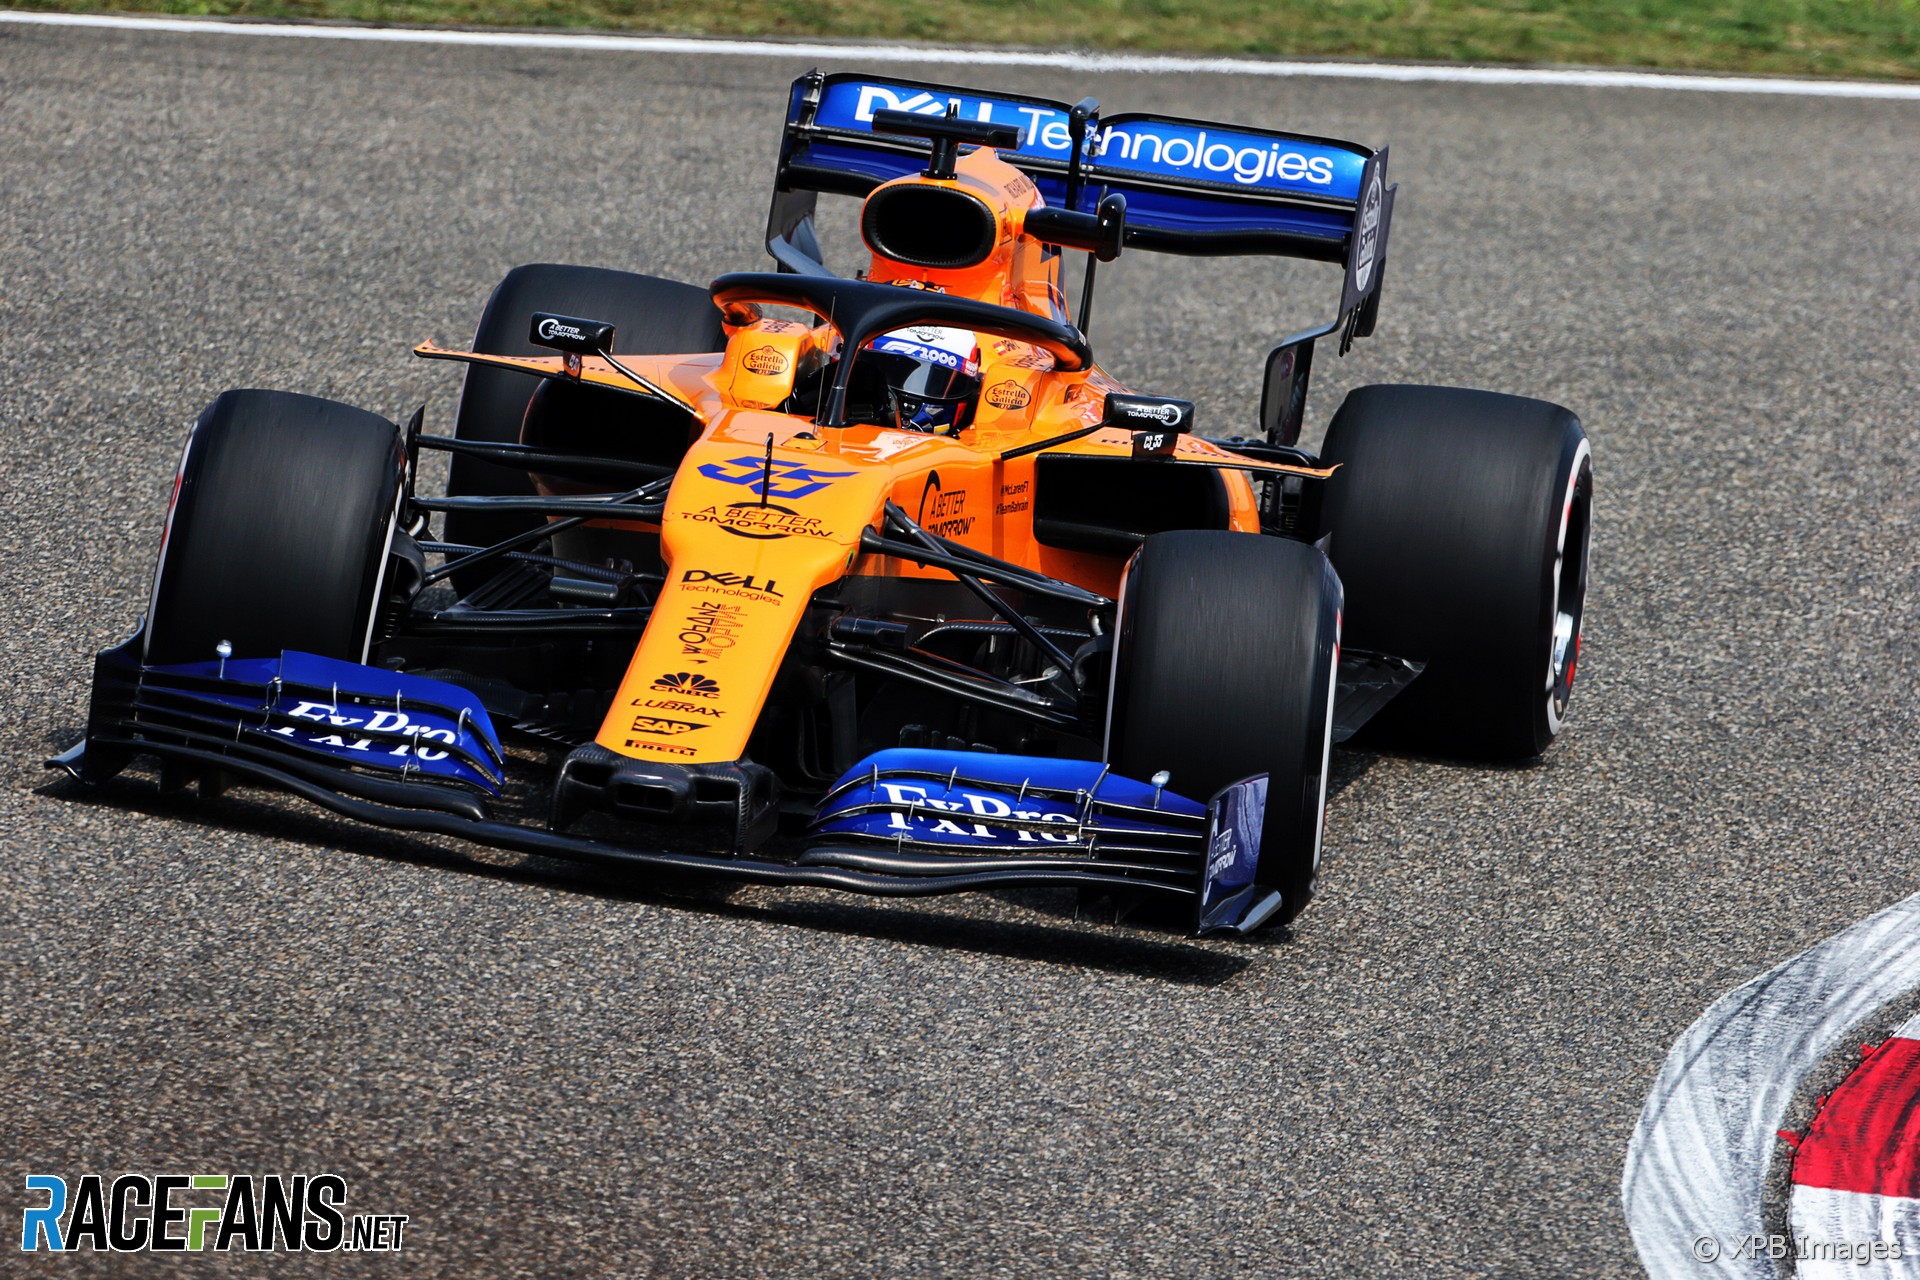 Carlos Sainz Jnr, McLaren, Shanghai International Circuit, 2019